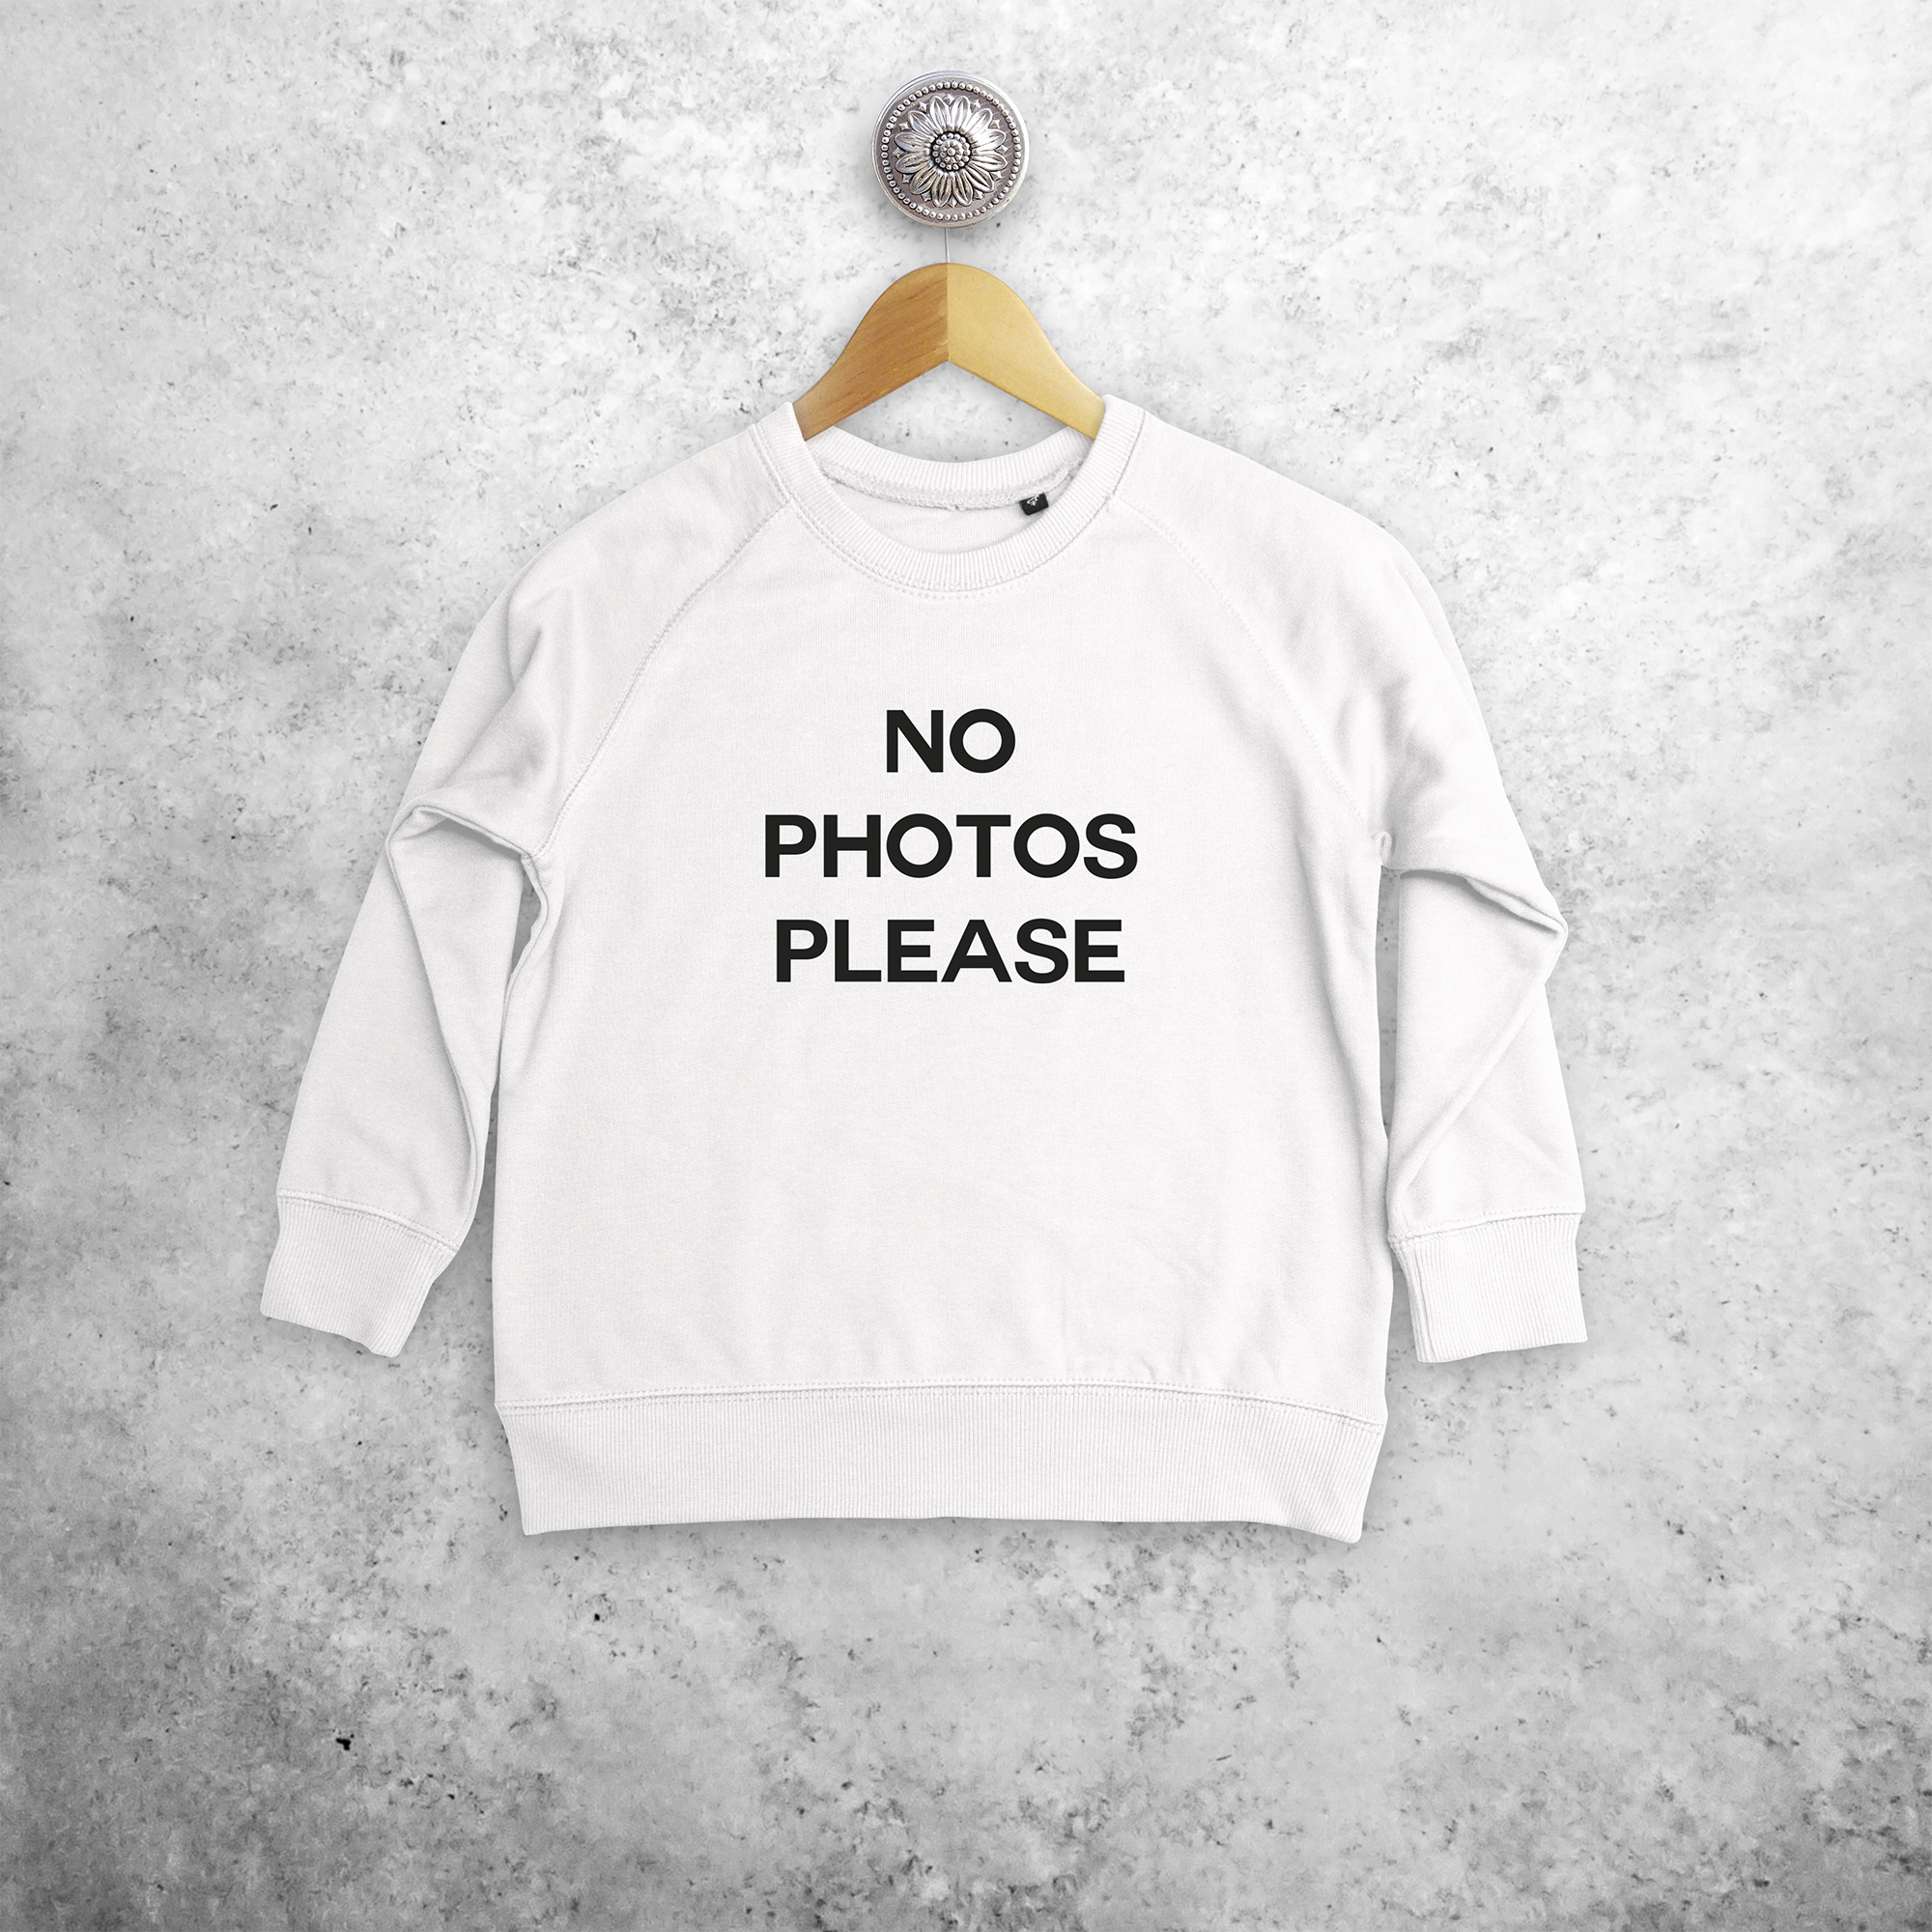 'No photos please' kids sweater